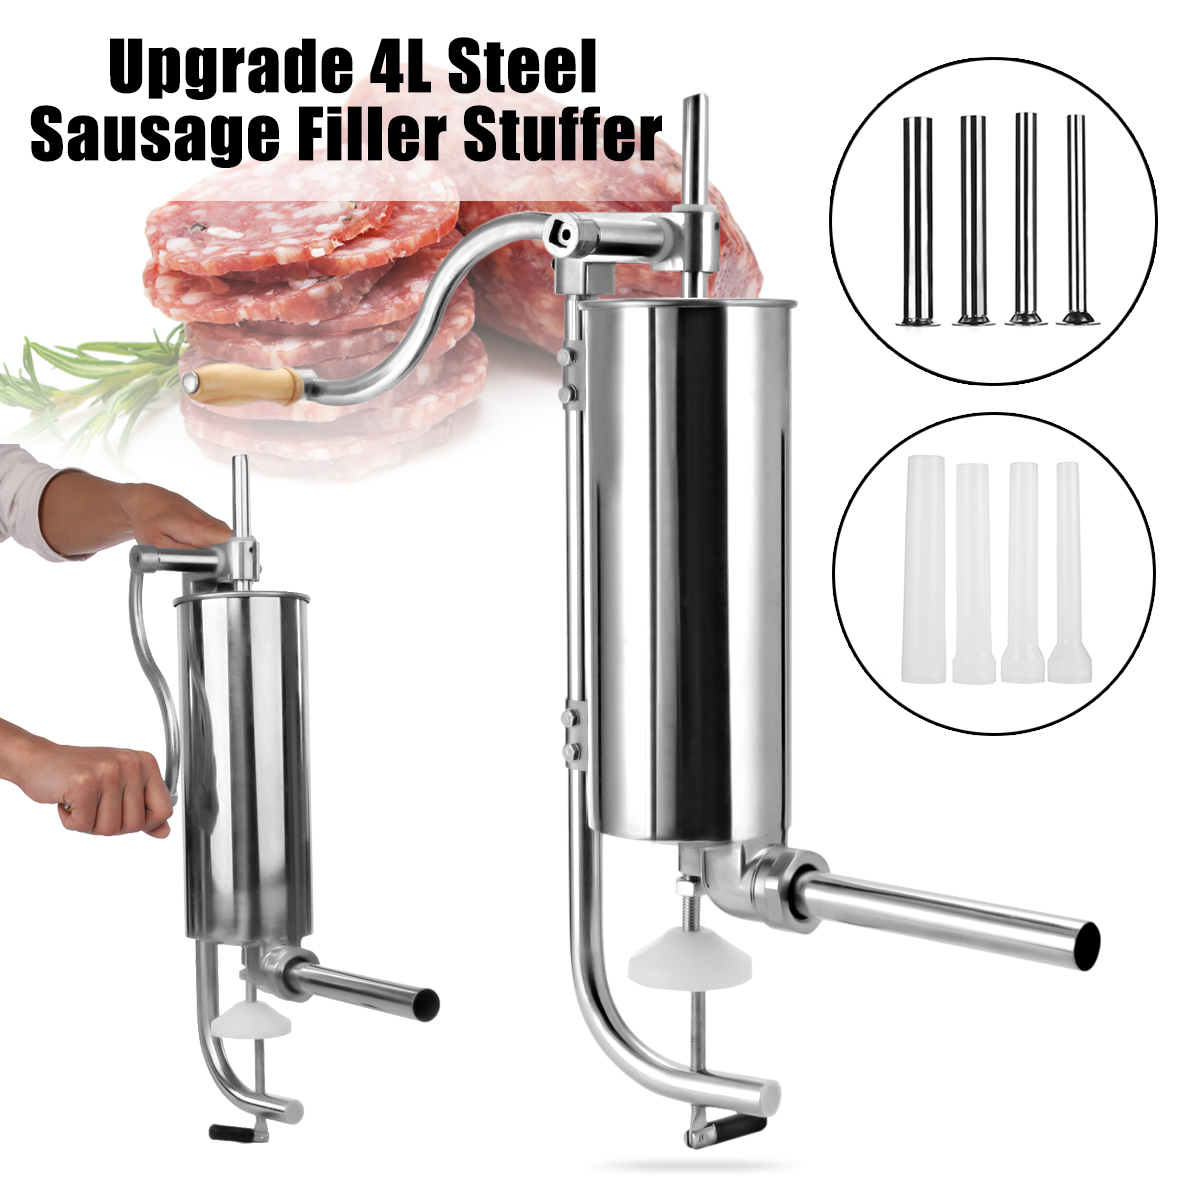 Upgrade-4L-304-Stainless-Steel-Sausage-Filler-Stuffer-Meatball-Maker-Vertical-Machine--8-Tube-1390546